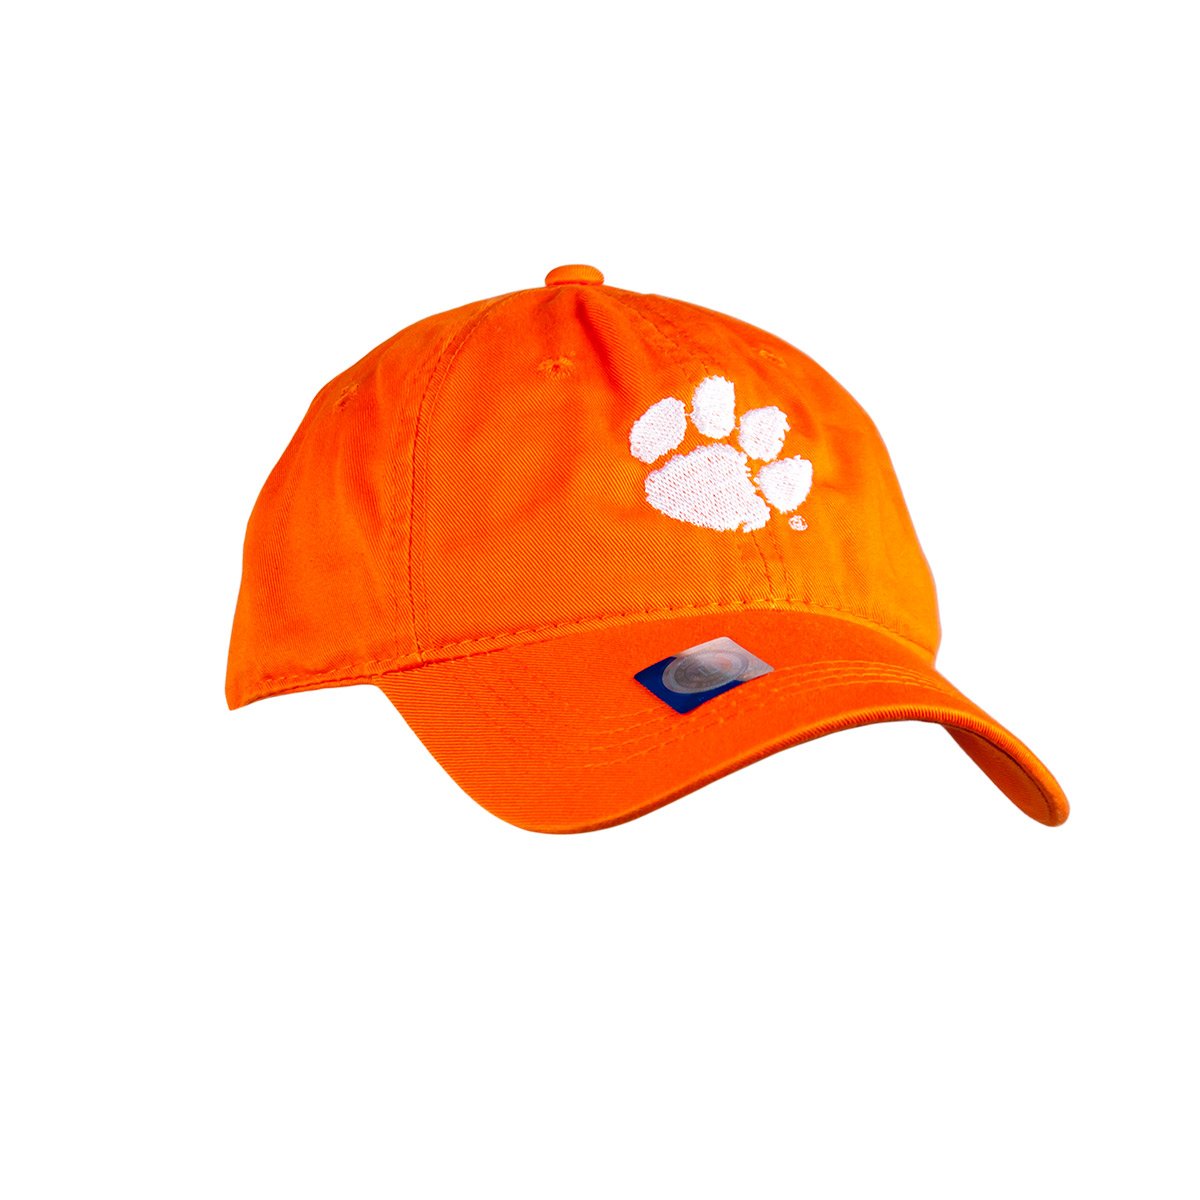 Clemson Orange Hat